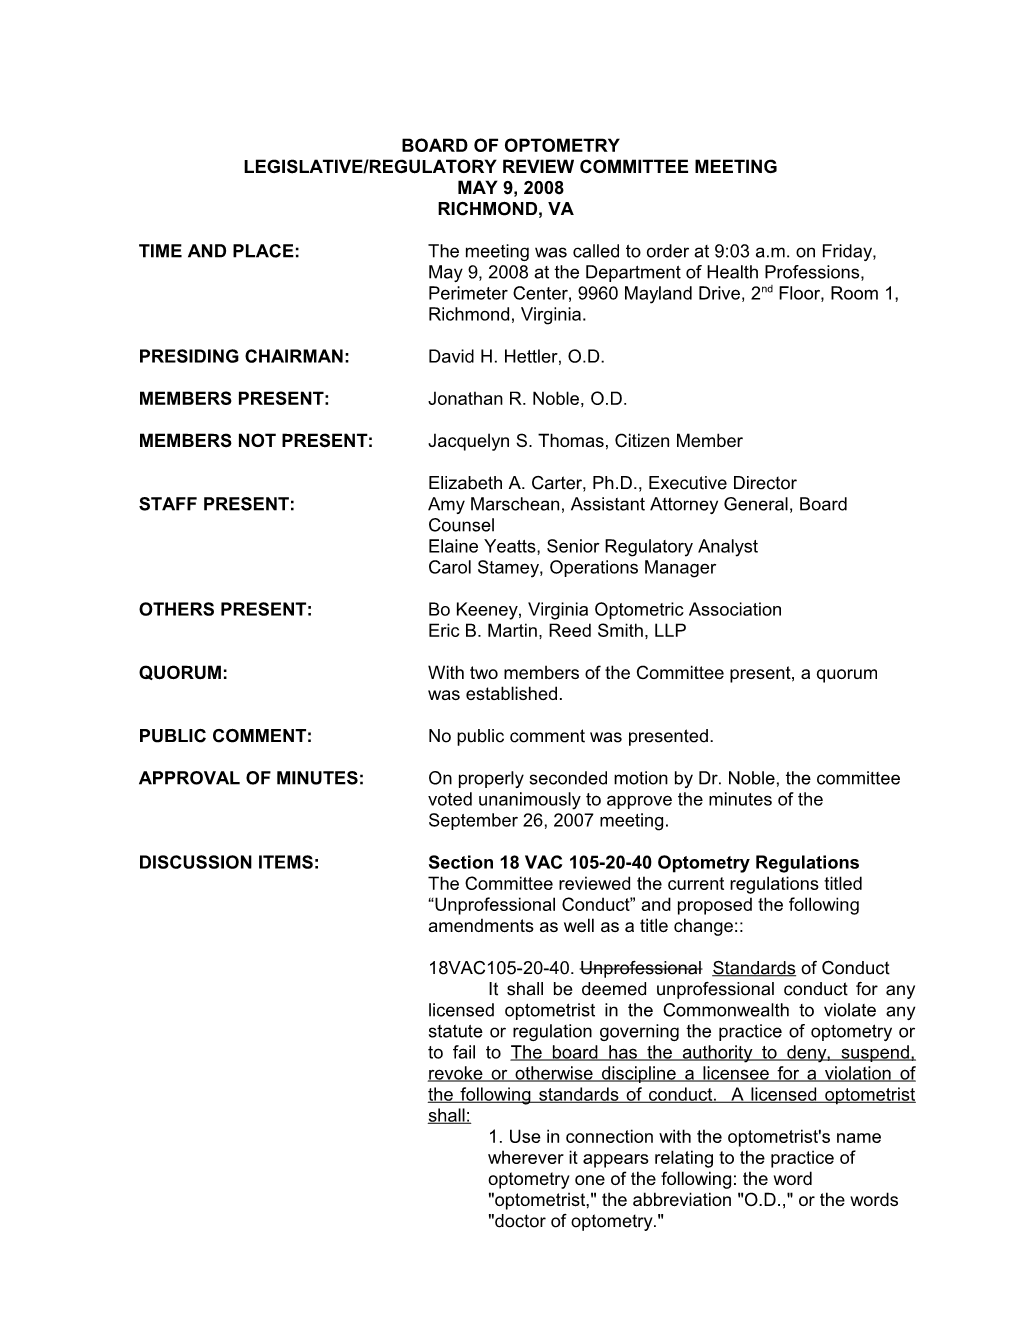 Board of Optometry Legislative/Regulatory Review Committee Minutes 5-9-2008